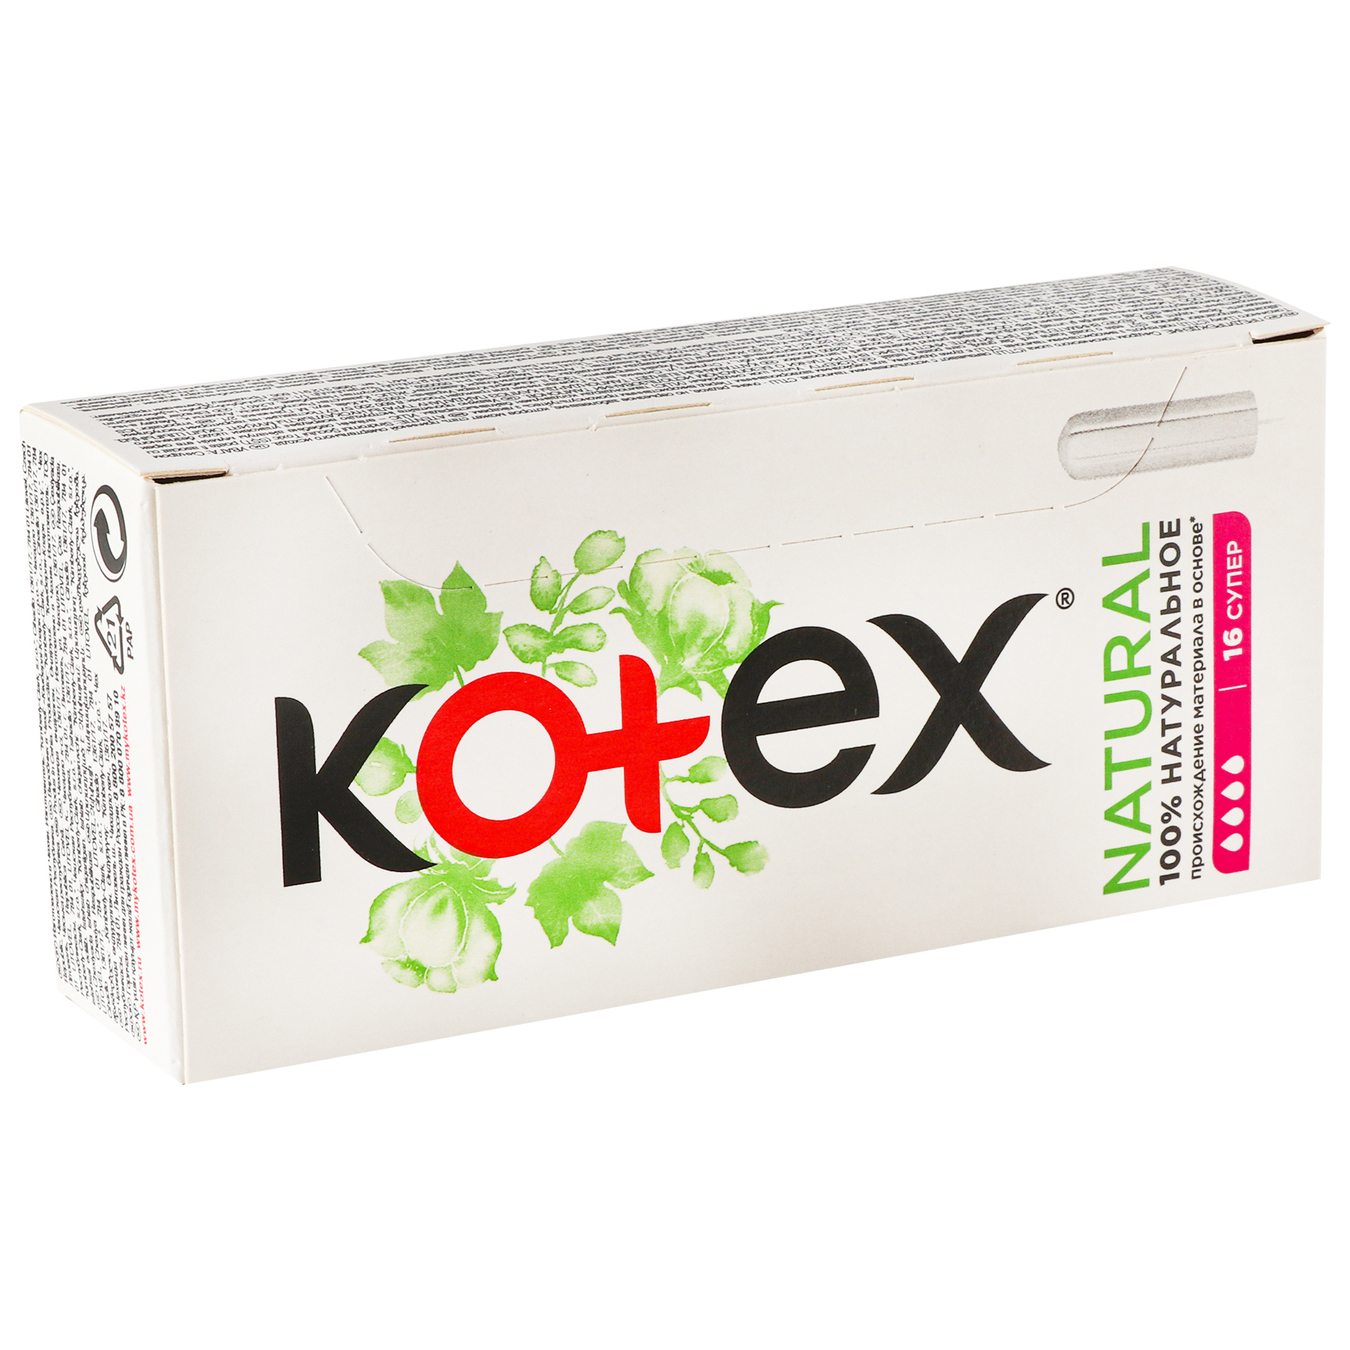 Tampons Kotex Natural hygienic super 16pcs 2